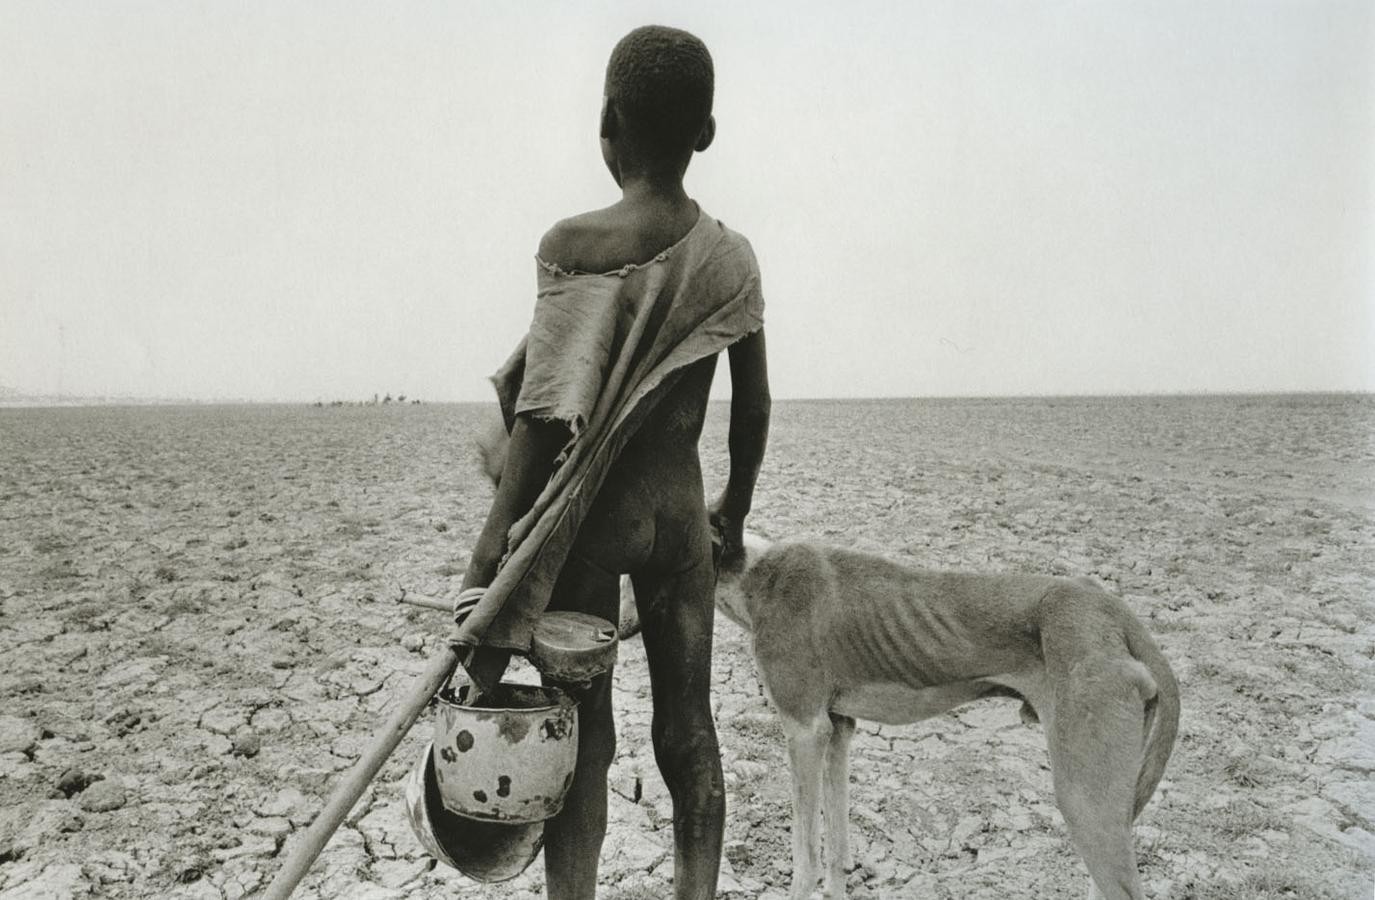 Сахель, Африка, 1984. Автор Себастьян Сальгадо